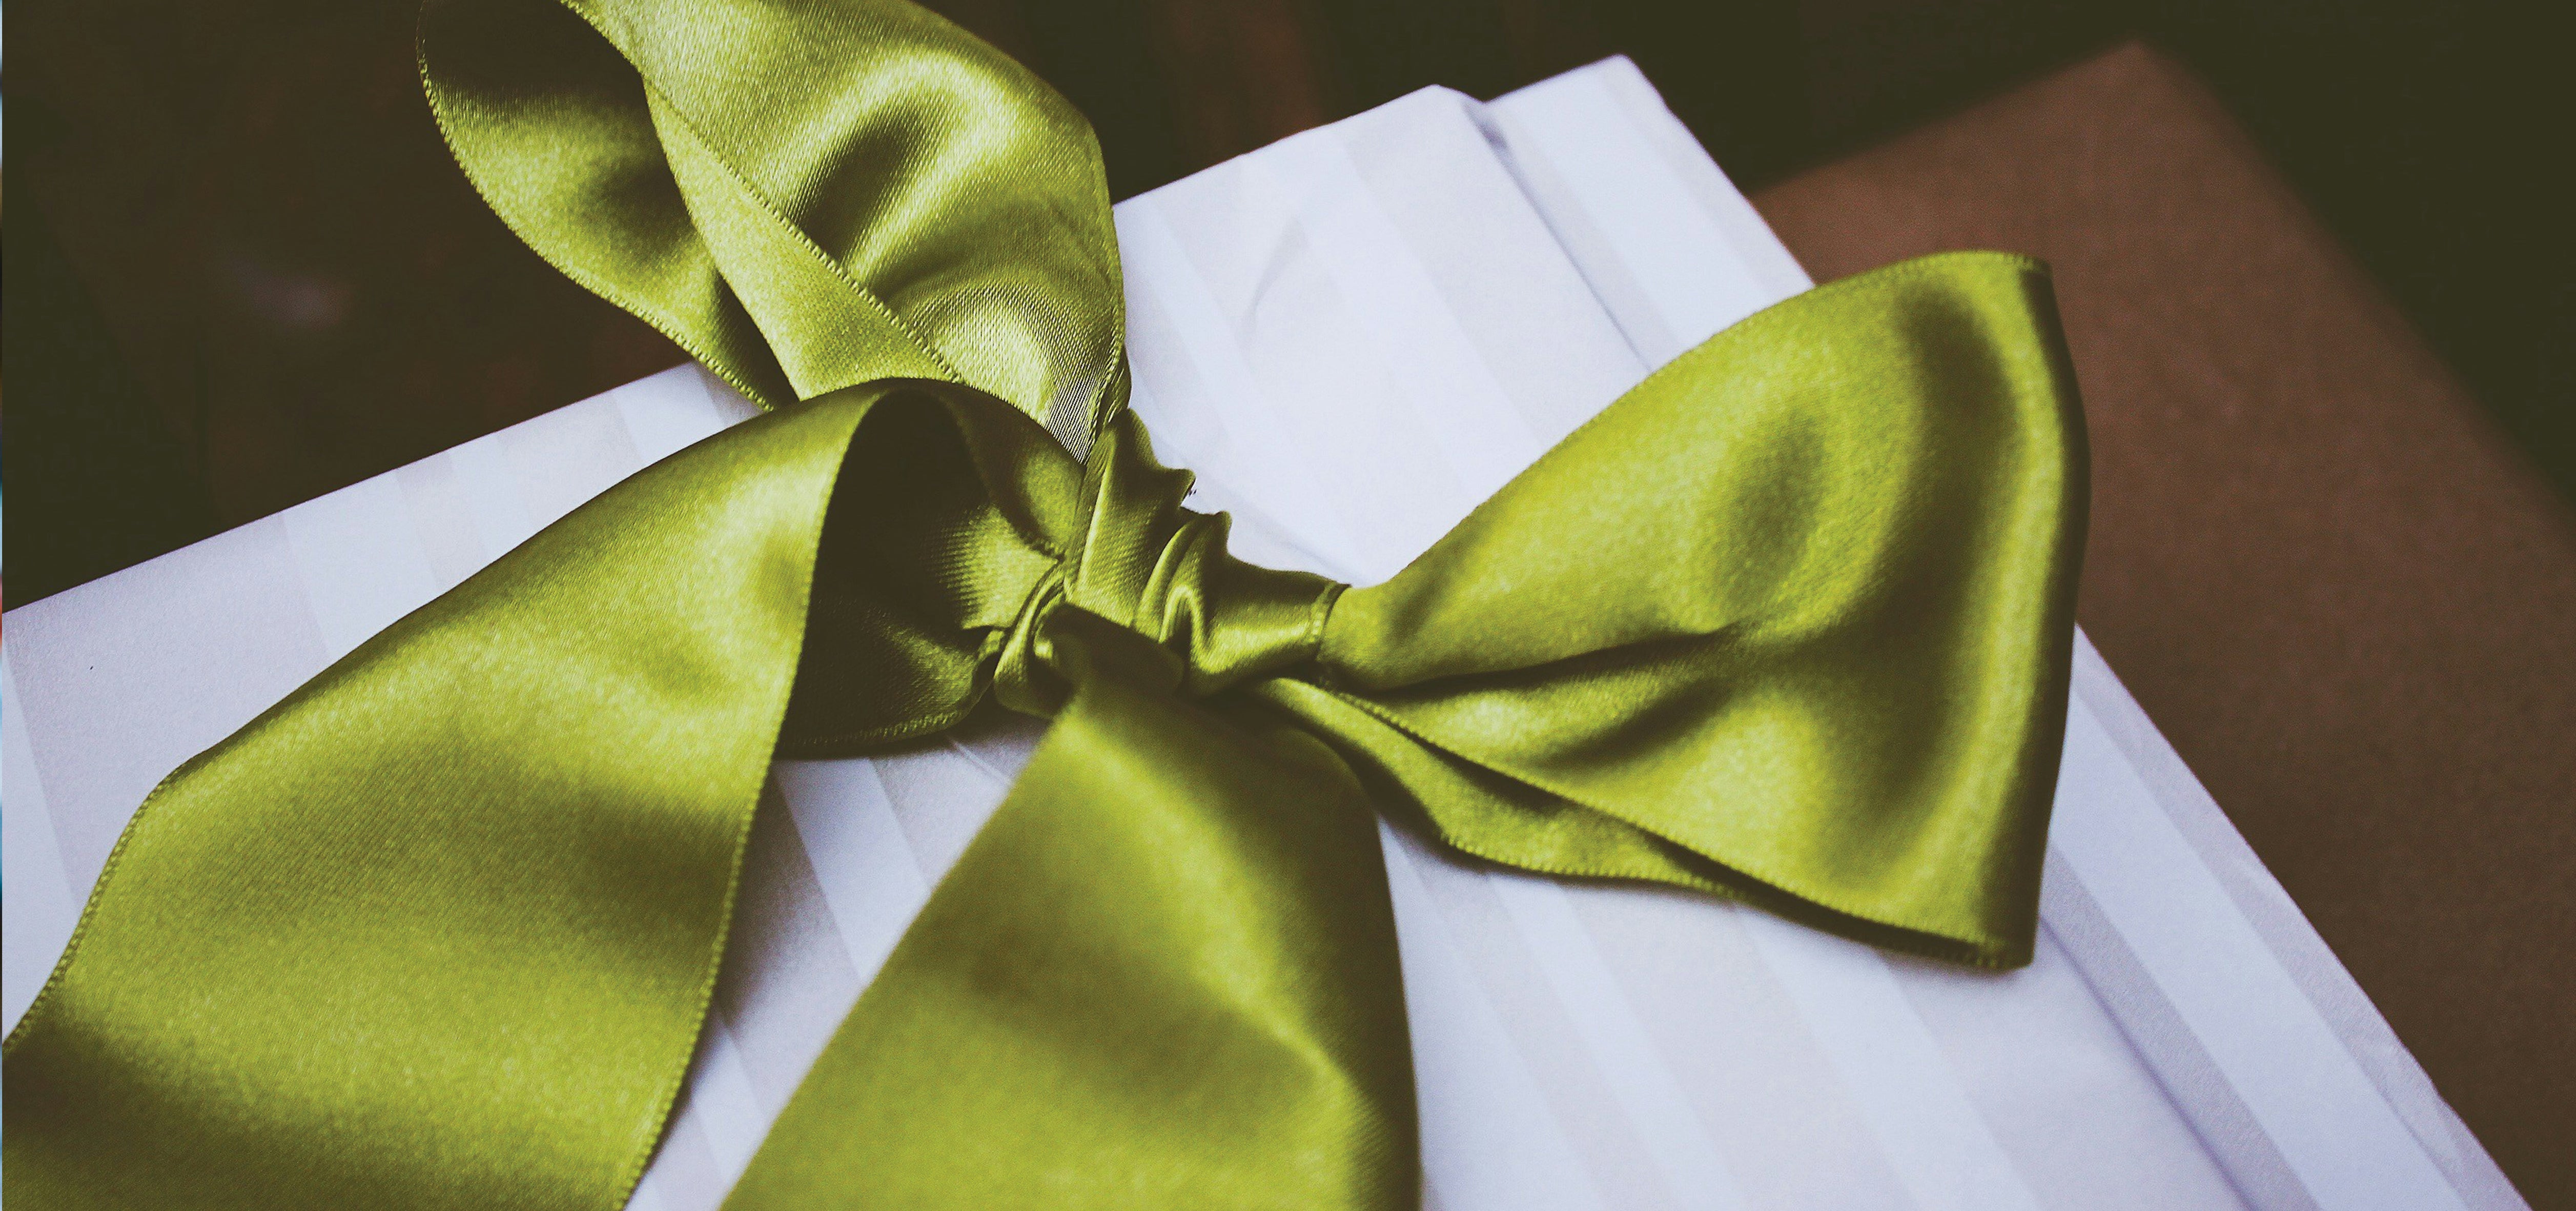 Tying the Knot: Elegant Ribbon Wedding Shoes